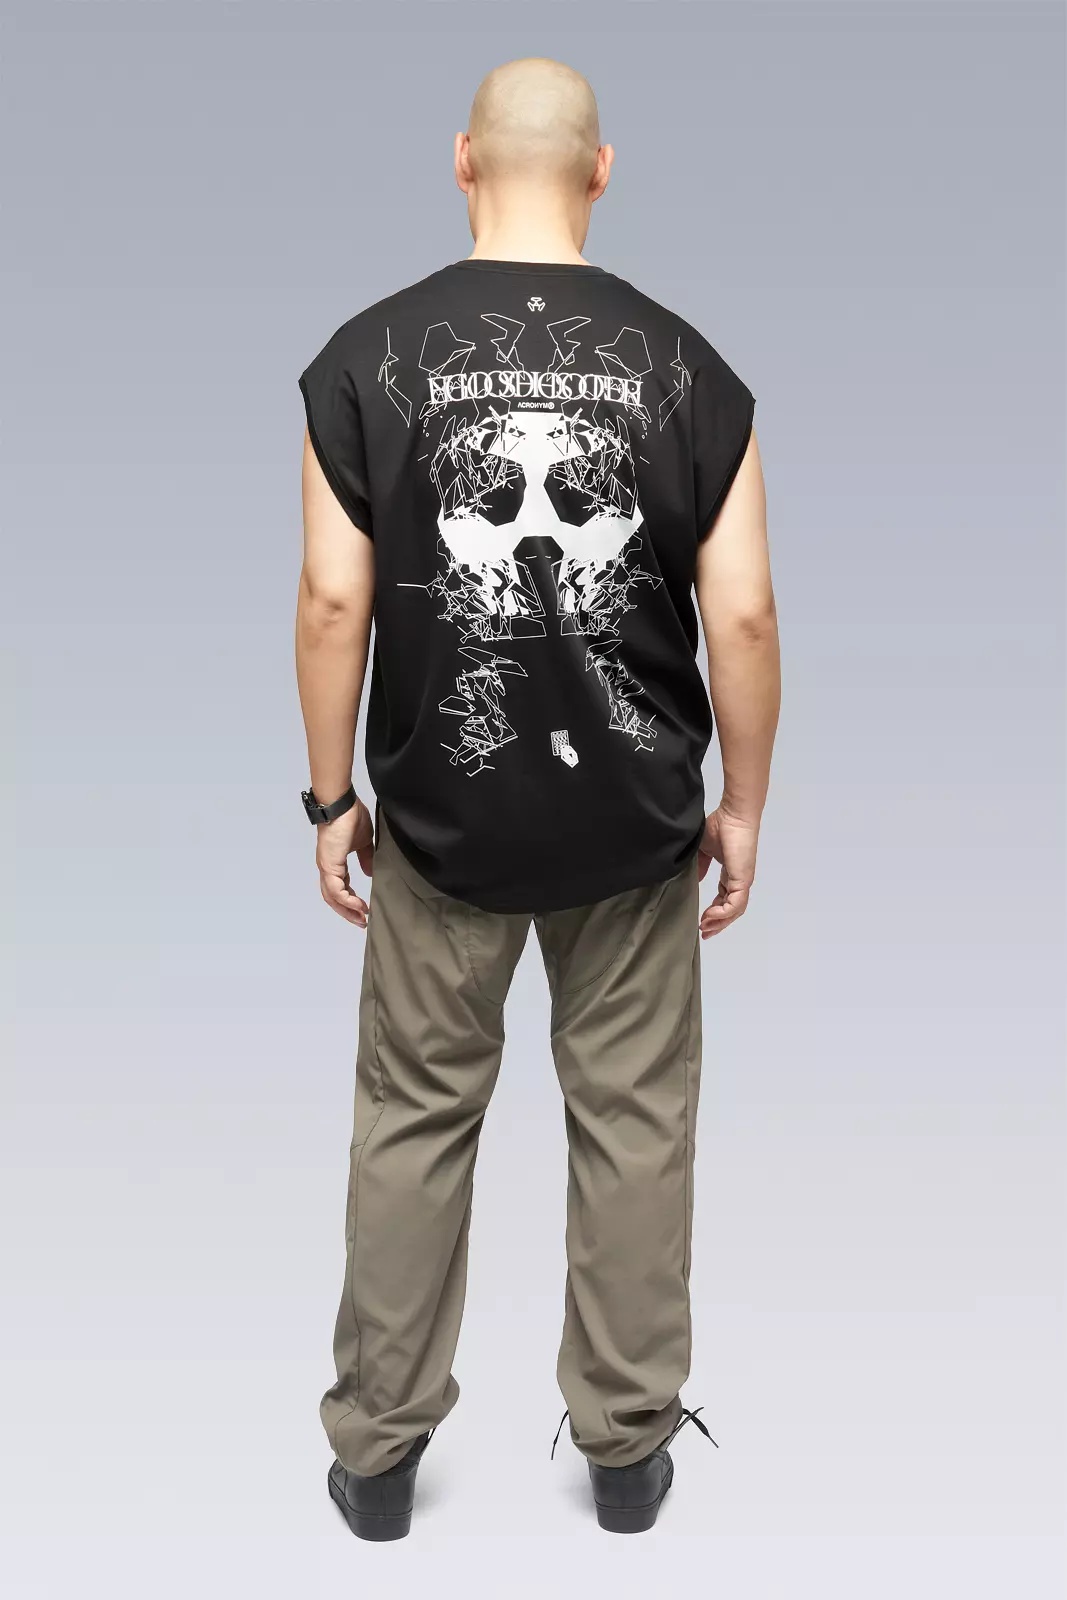 S25-PR-B 100% Cotton Mercerized Sleeveless T-shirt Black - 3